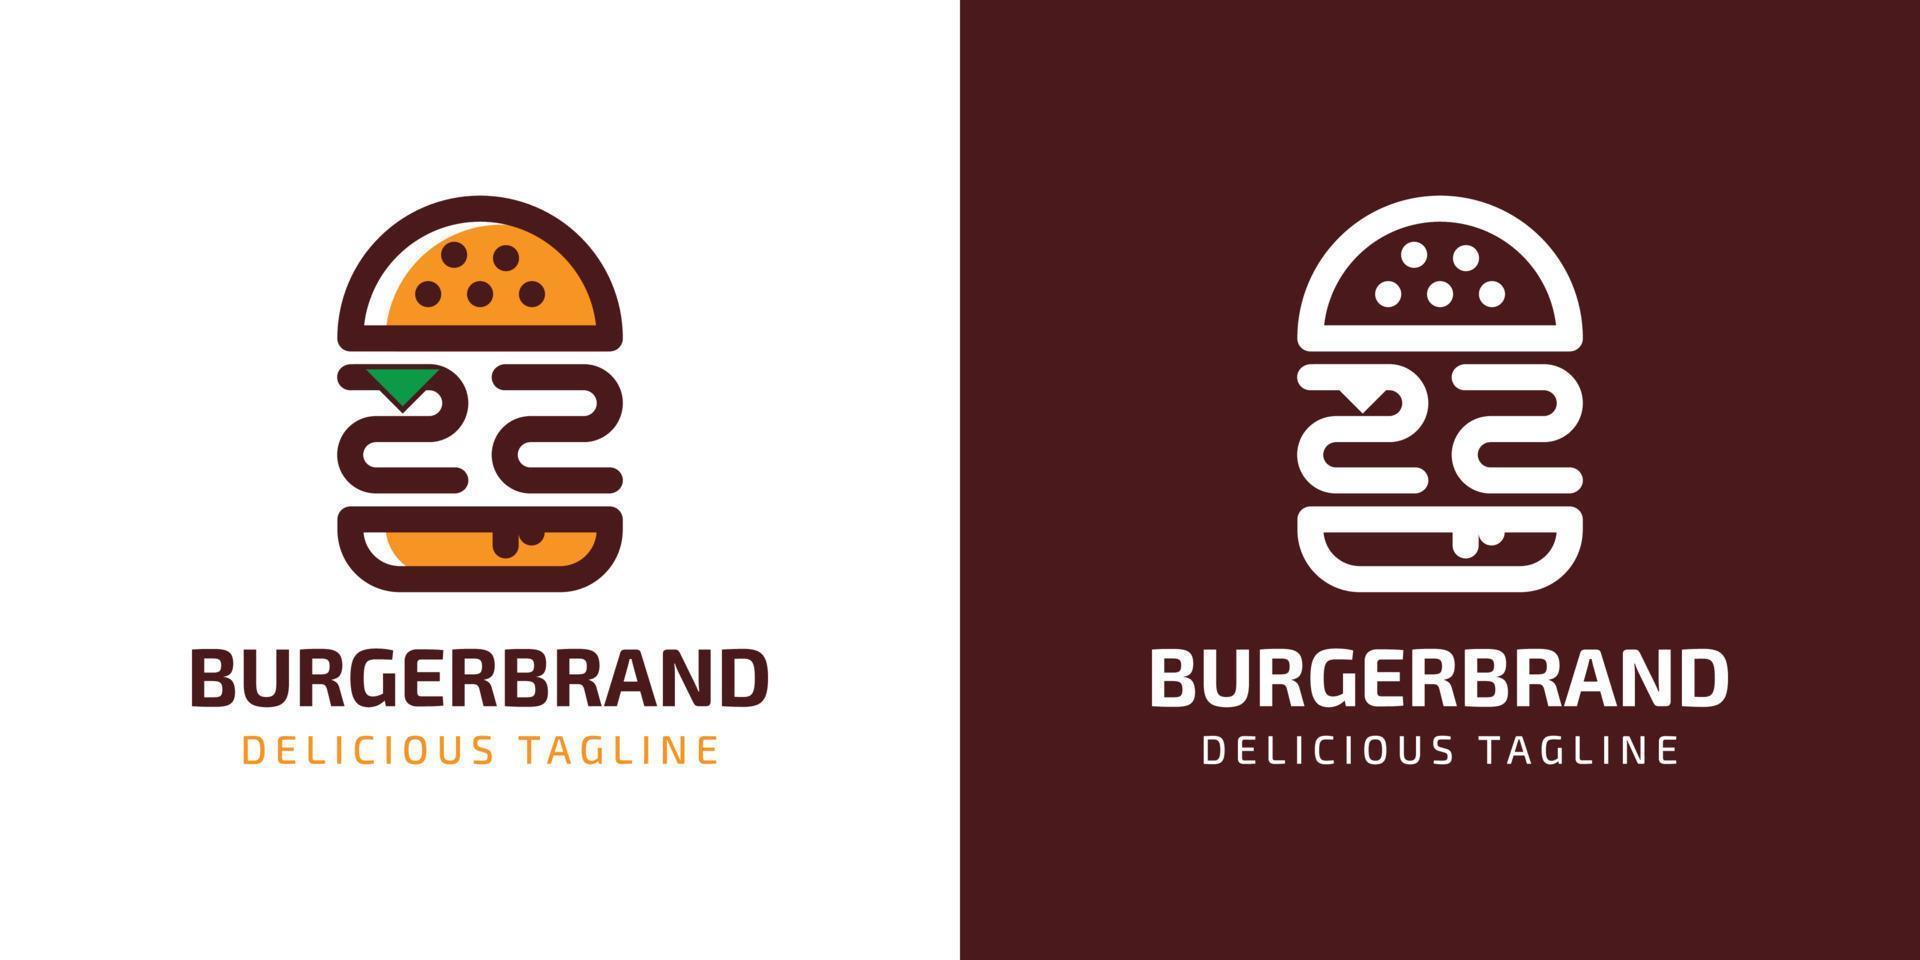 letra zz hamburguesa logo, adecuado para ninguna negocio relacionado a hamburguesa con z o zz iniciales. vector